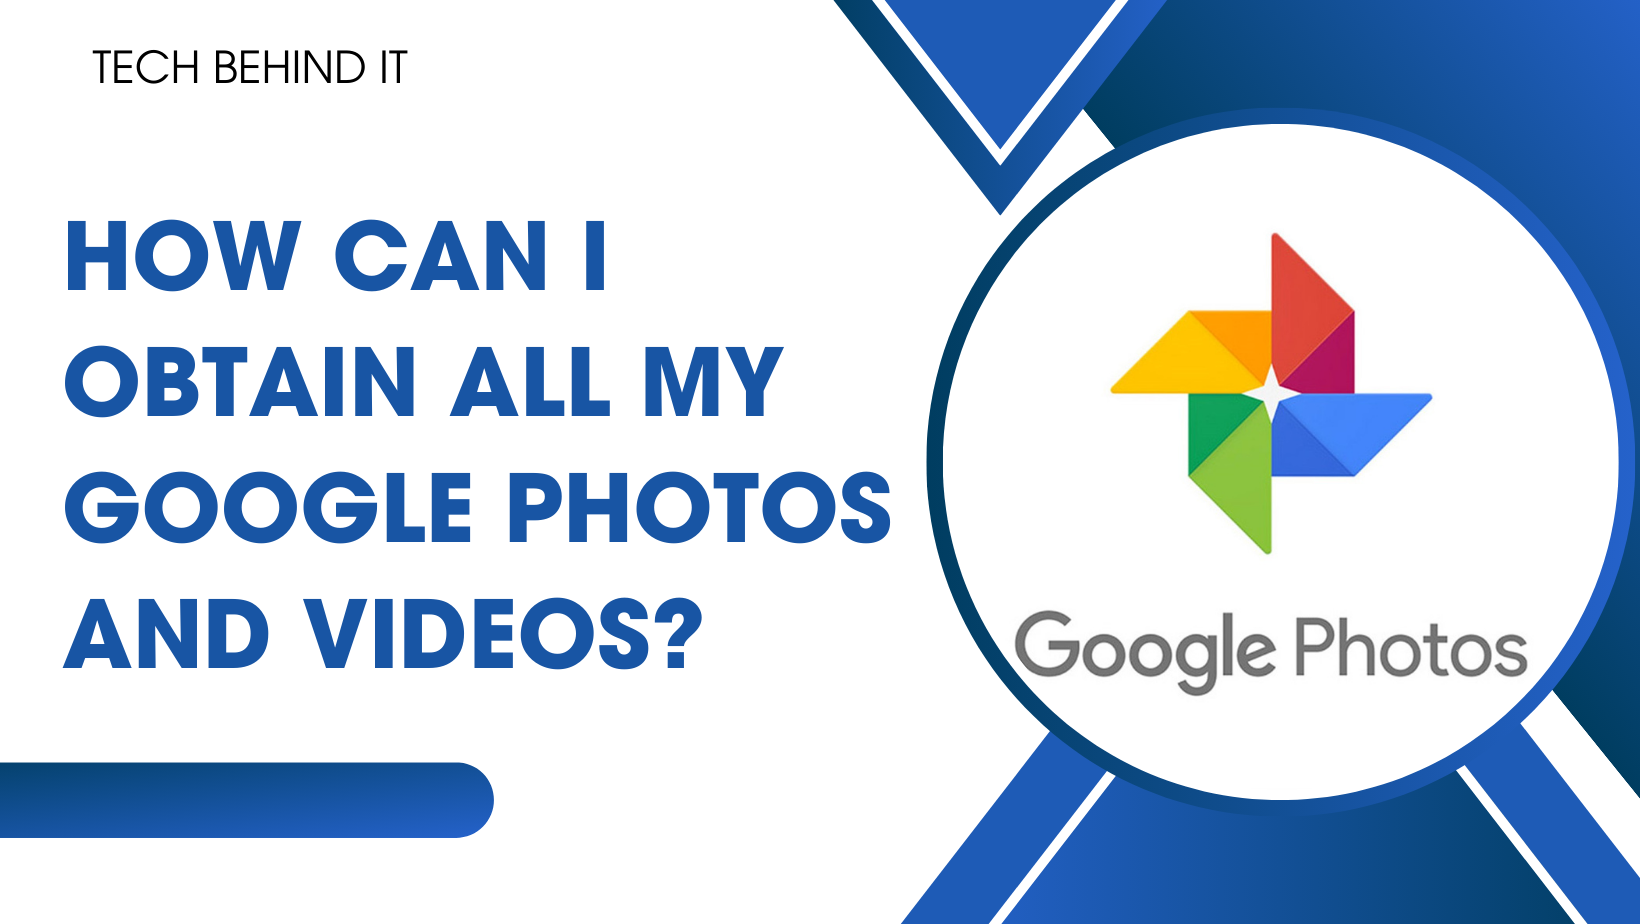 How can I obtain all my Google photos and videos?